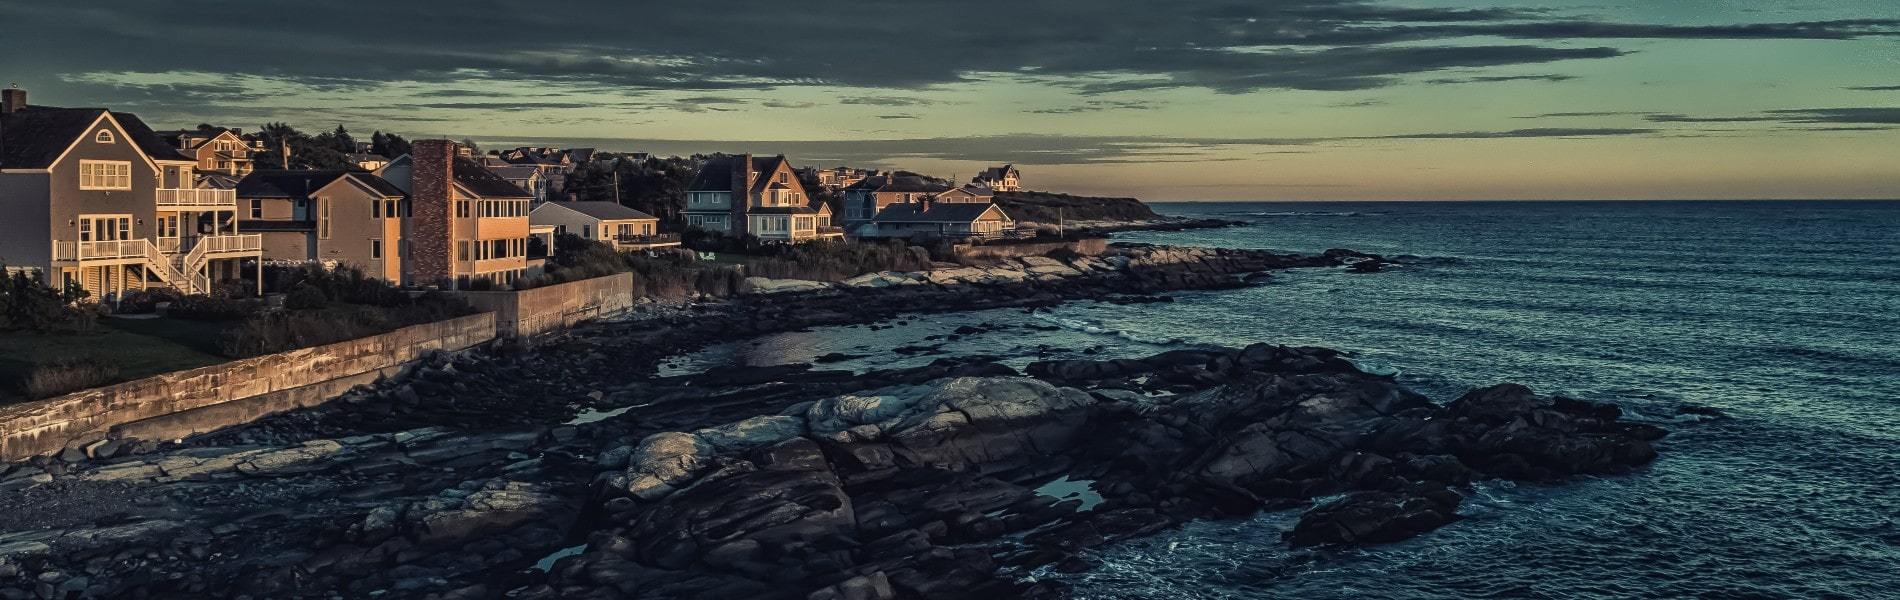 Homes on the Rhode Island coastline